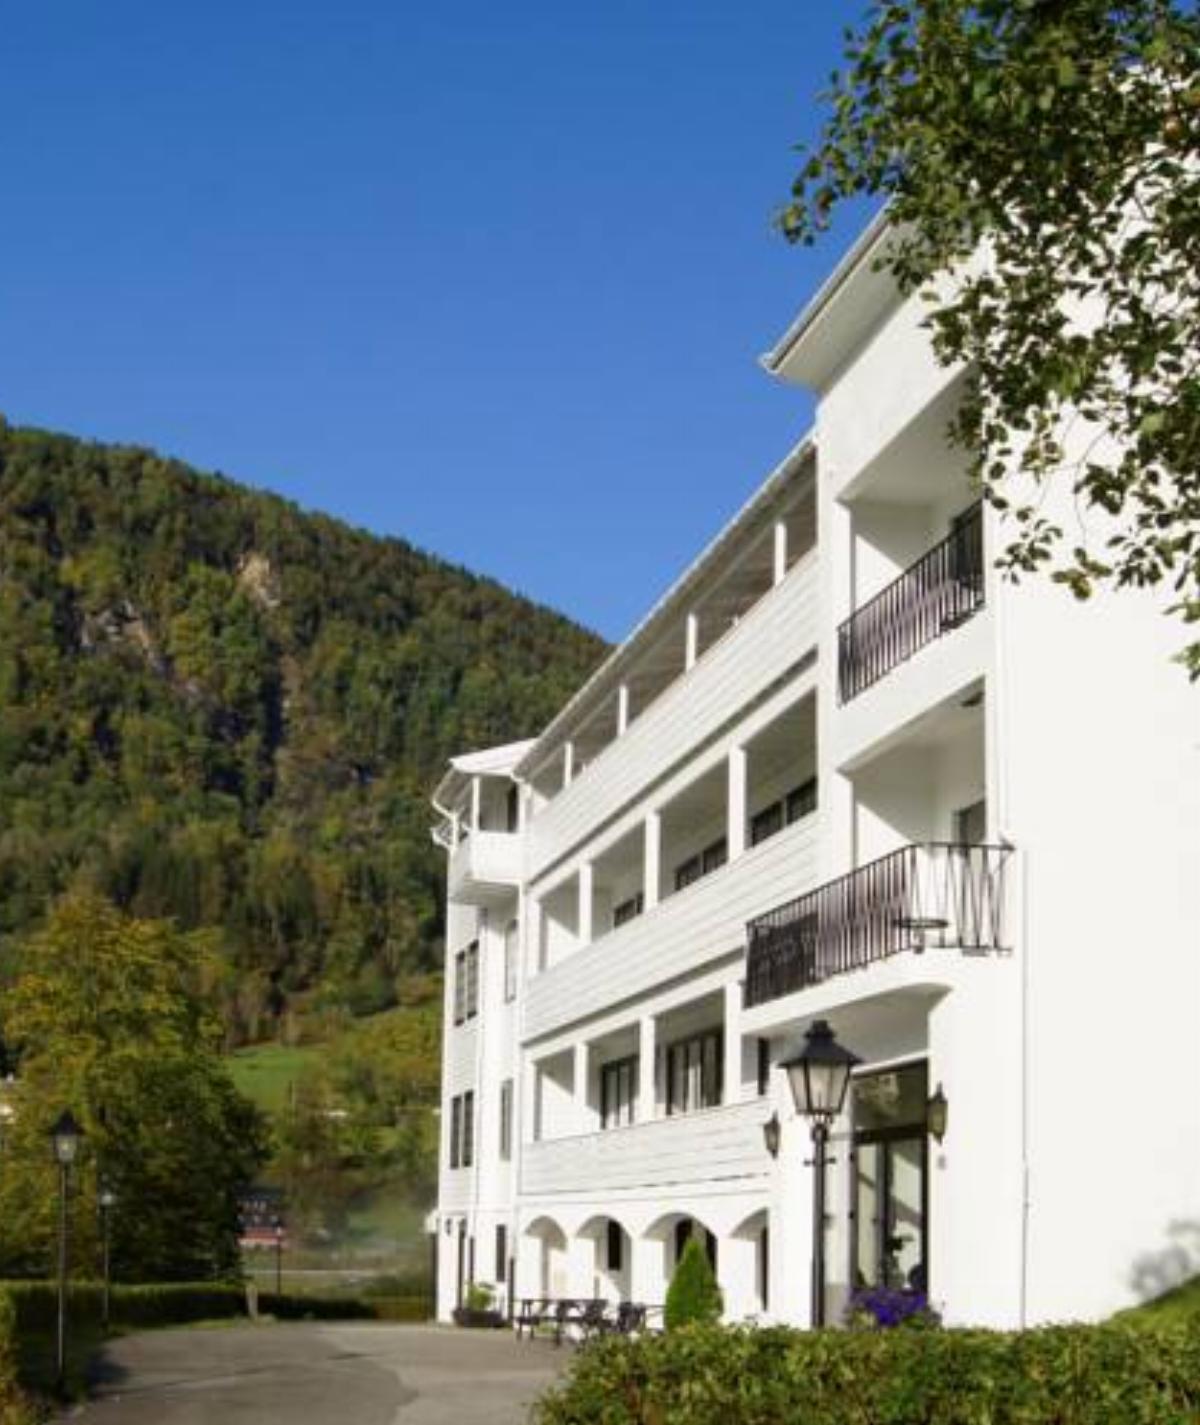 Lilandtunet Gjestgiveri Hotel Liland Norway